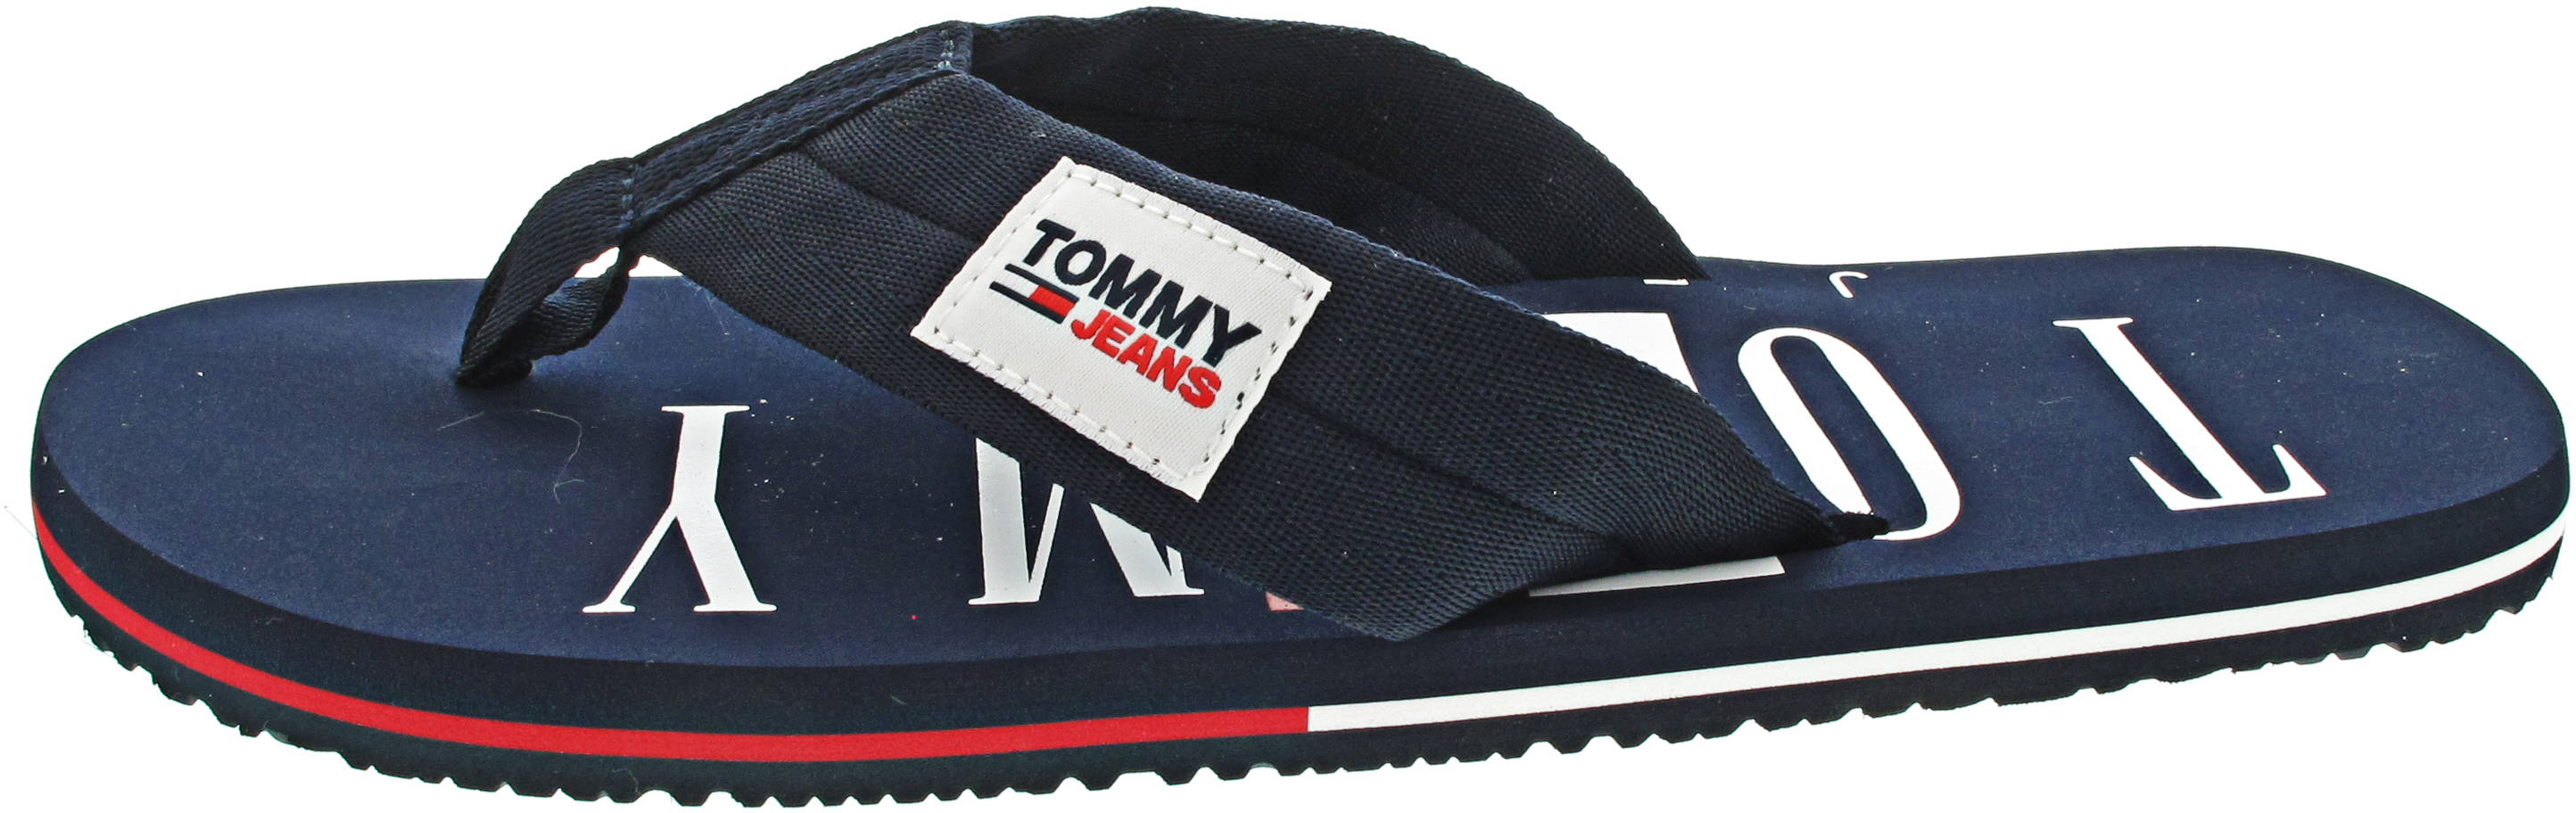 Tommy Hilfiger Tommy jeans Beach Sandal